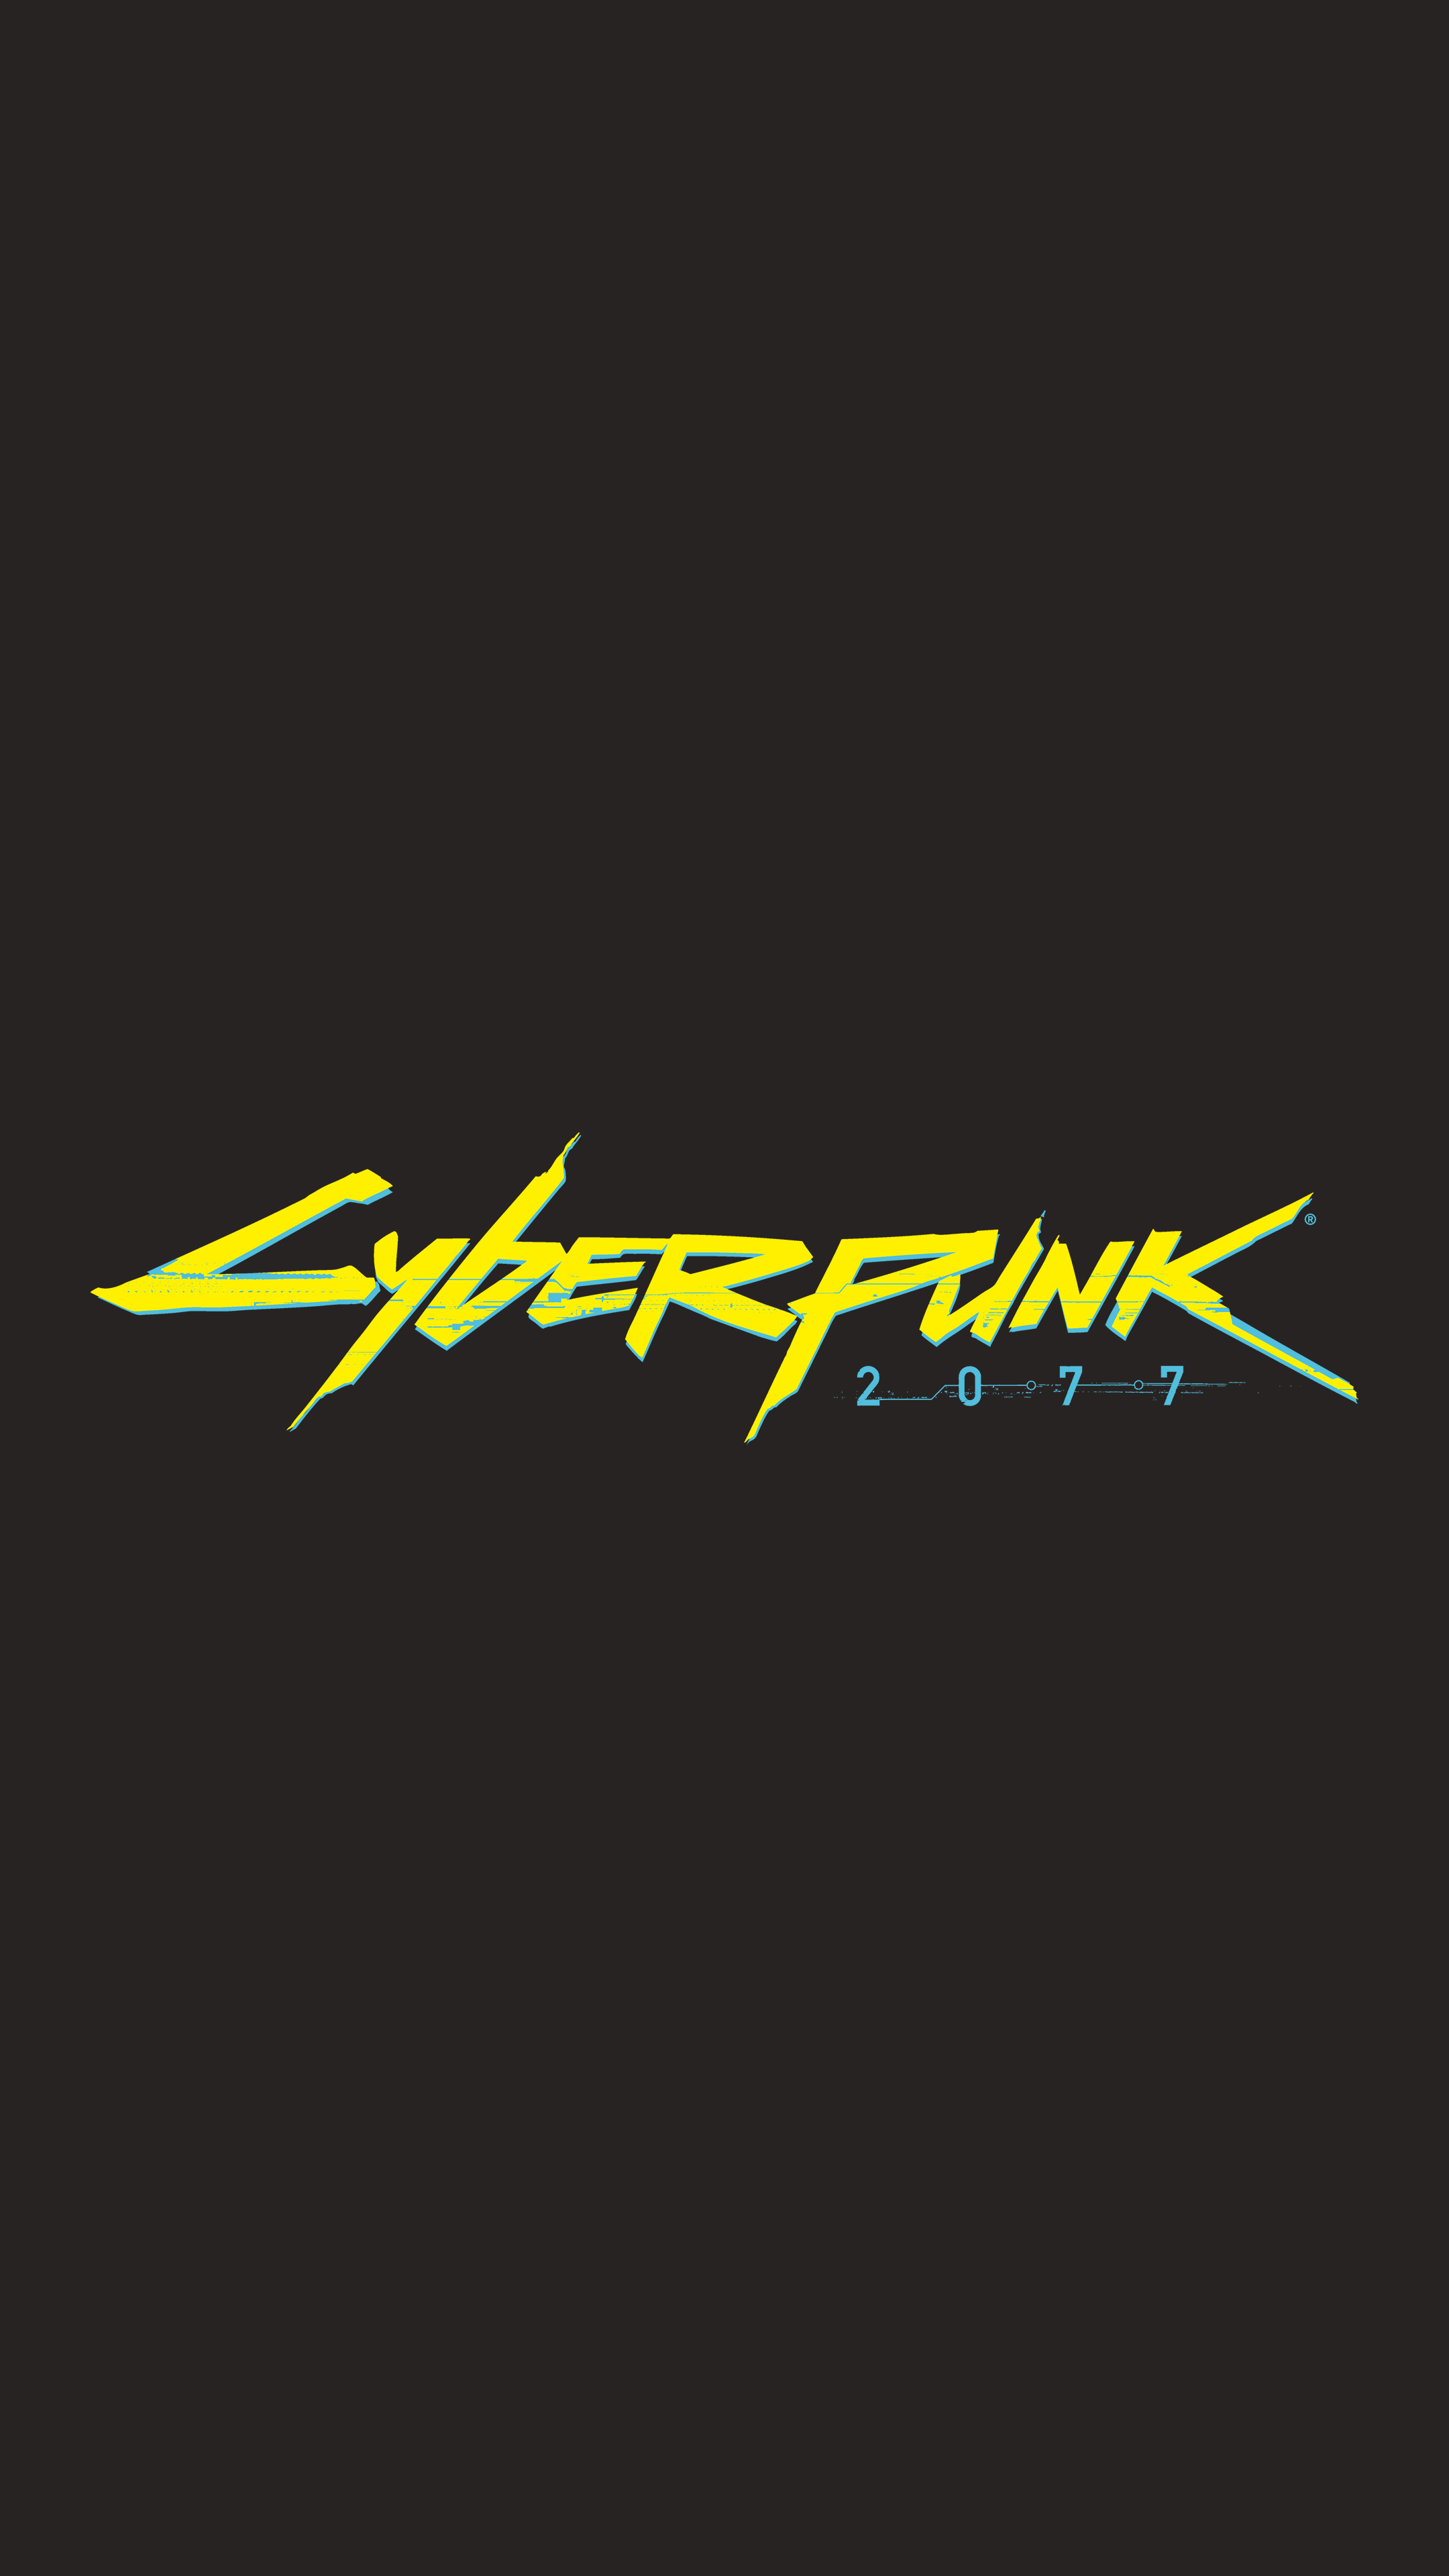 Cyberpunk логотип png фото 107